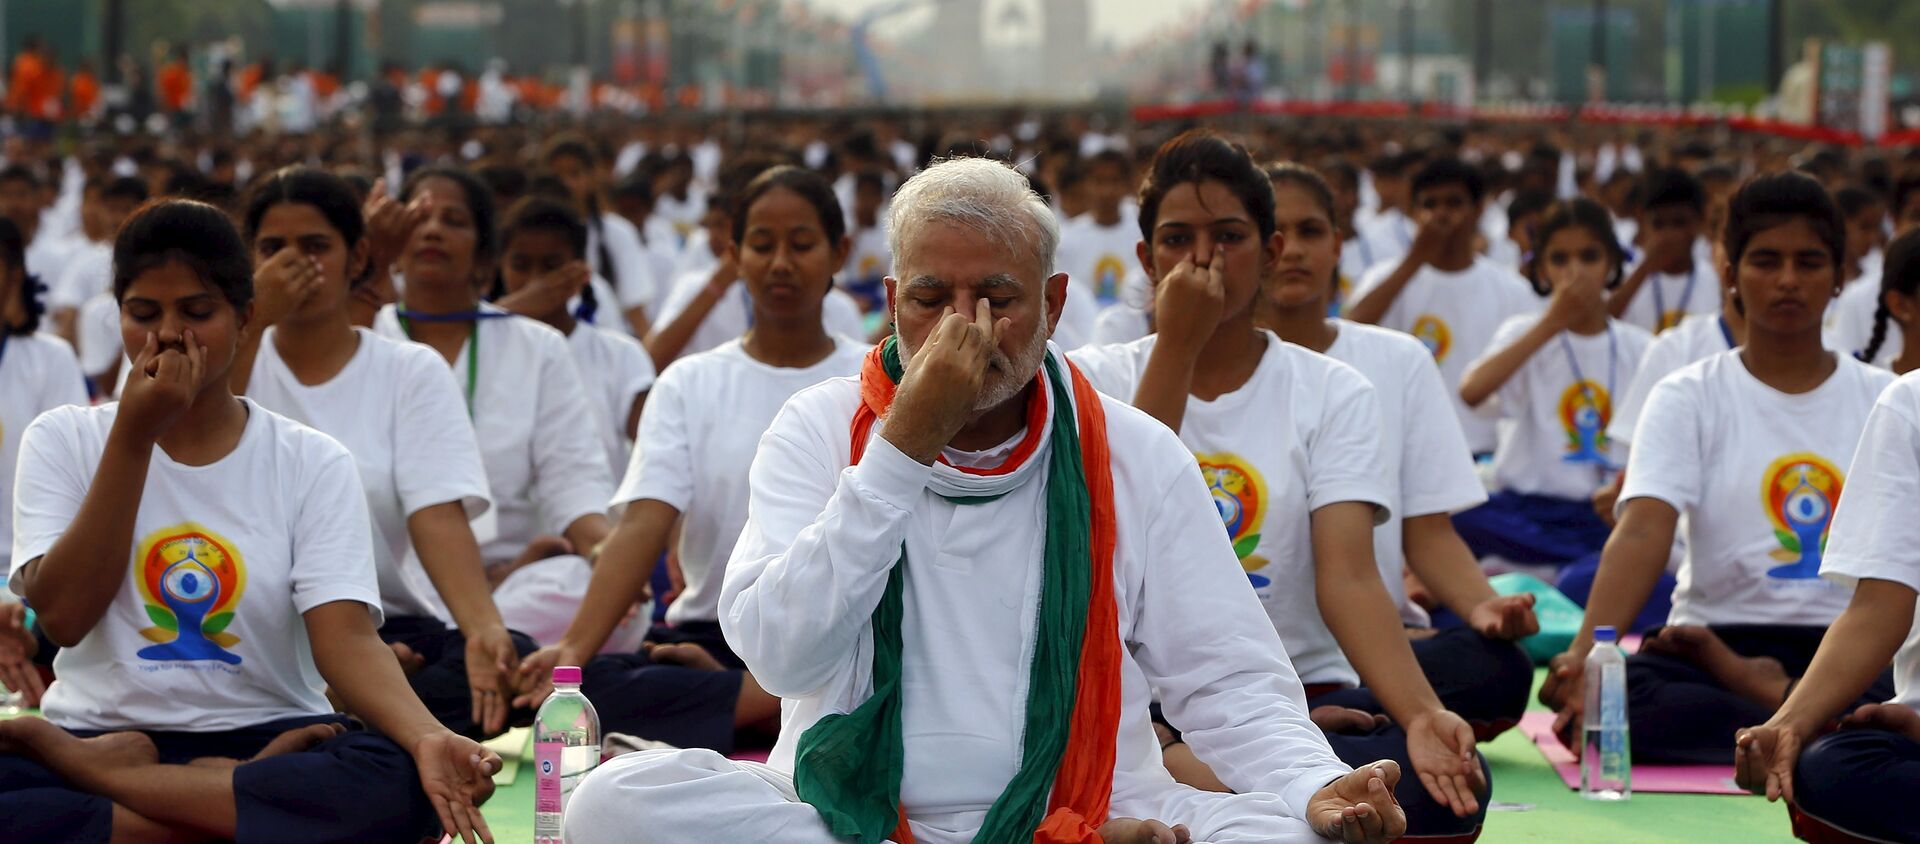 Narendra Modi, primer ministro de la India da clase de yoga para 35.000 personas en Nueva Delhi - Sputnik Mundo, 1920, 21.06.2015